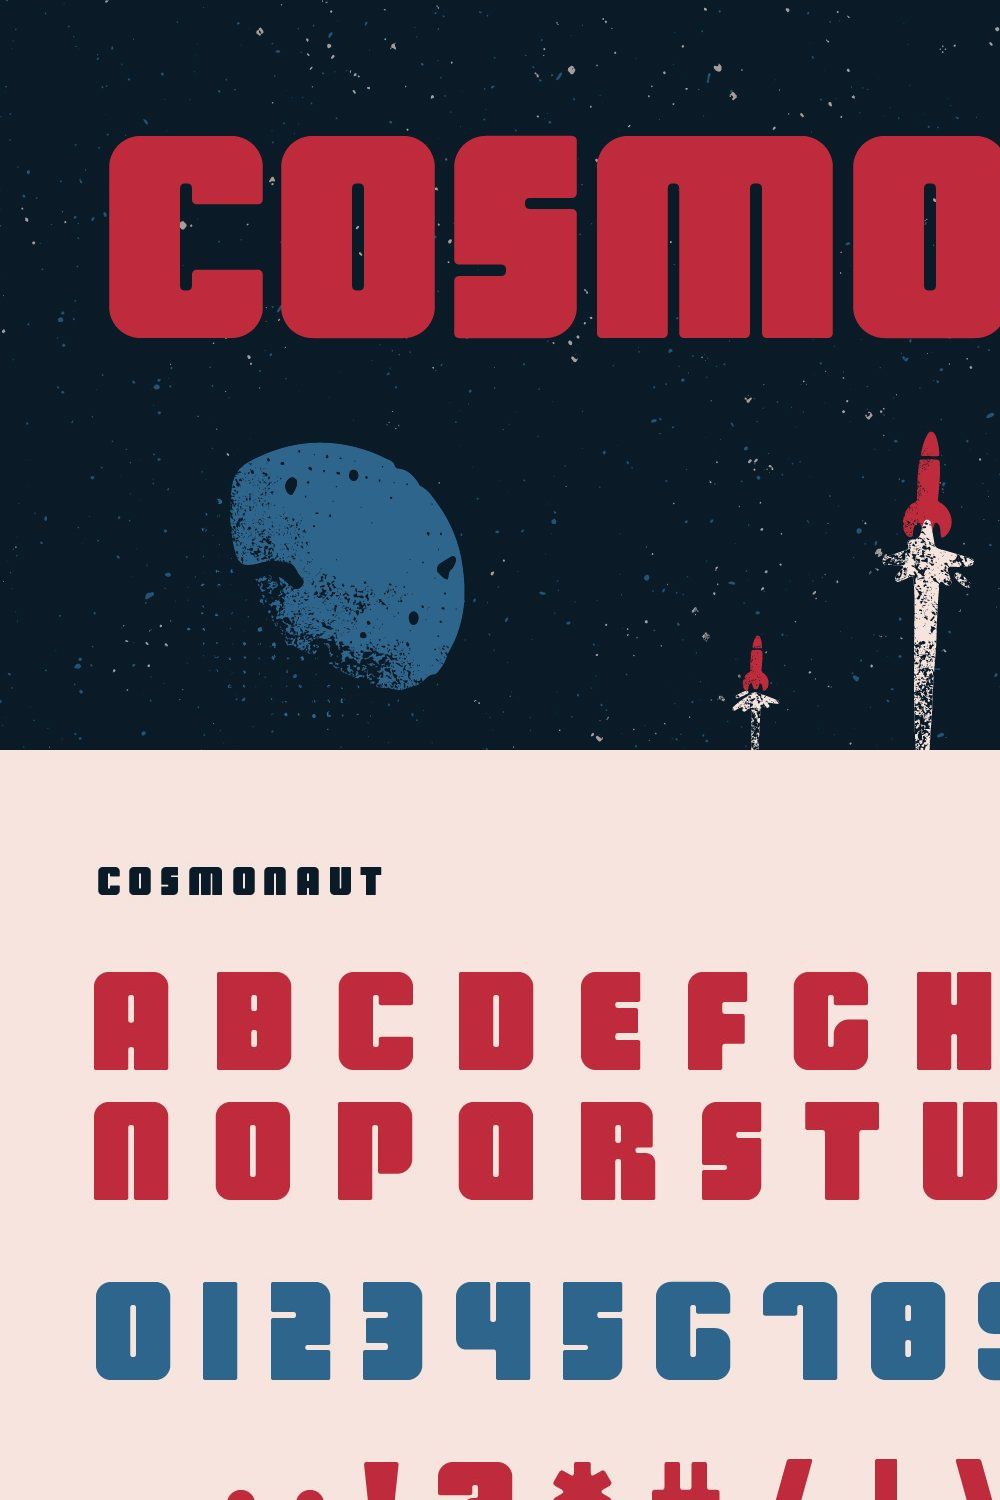 Cosmonaut - Soviet Space Font pinterest preview image.